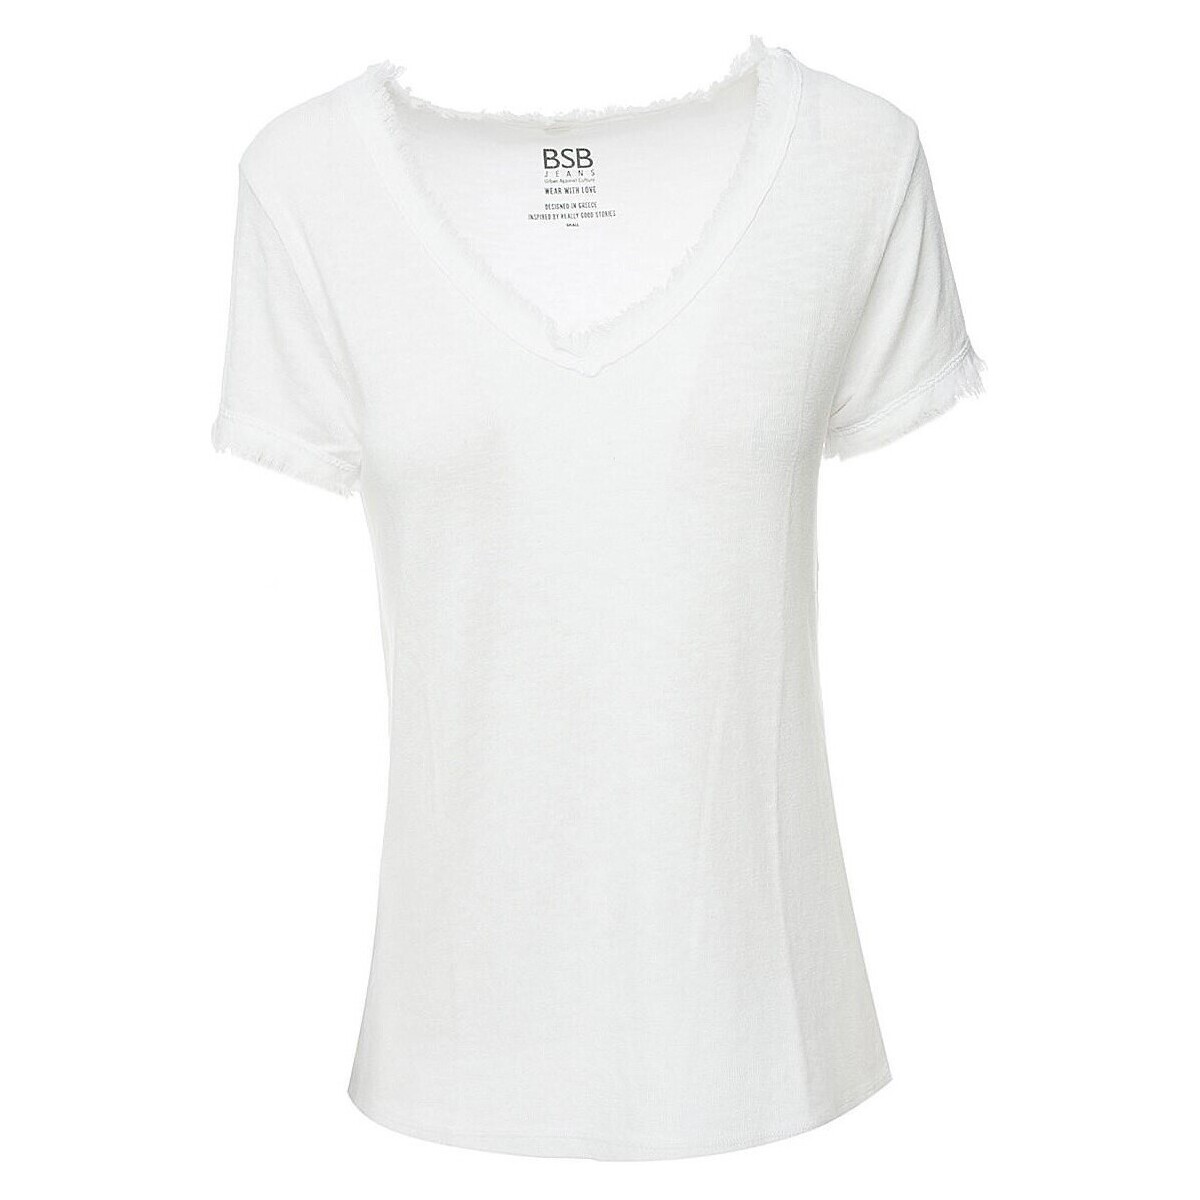 textil Mujer Tops y Camisetas Bsb CAMISETA--051-210128-WHITE Multicolor